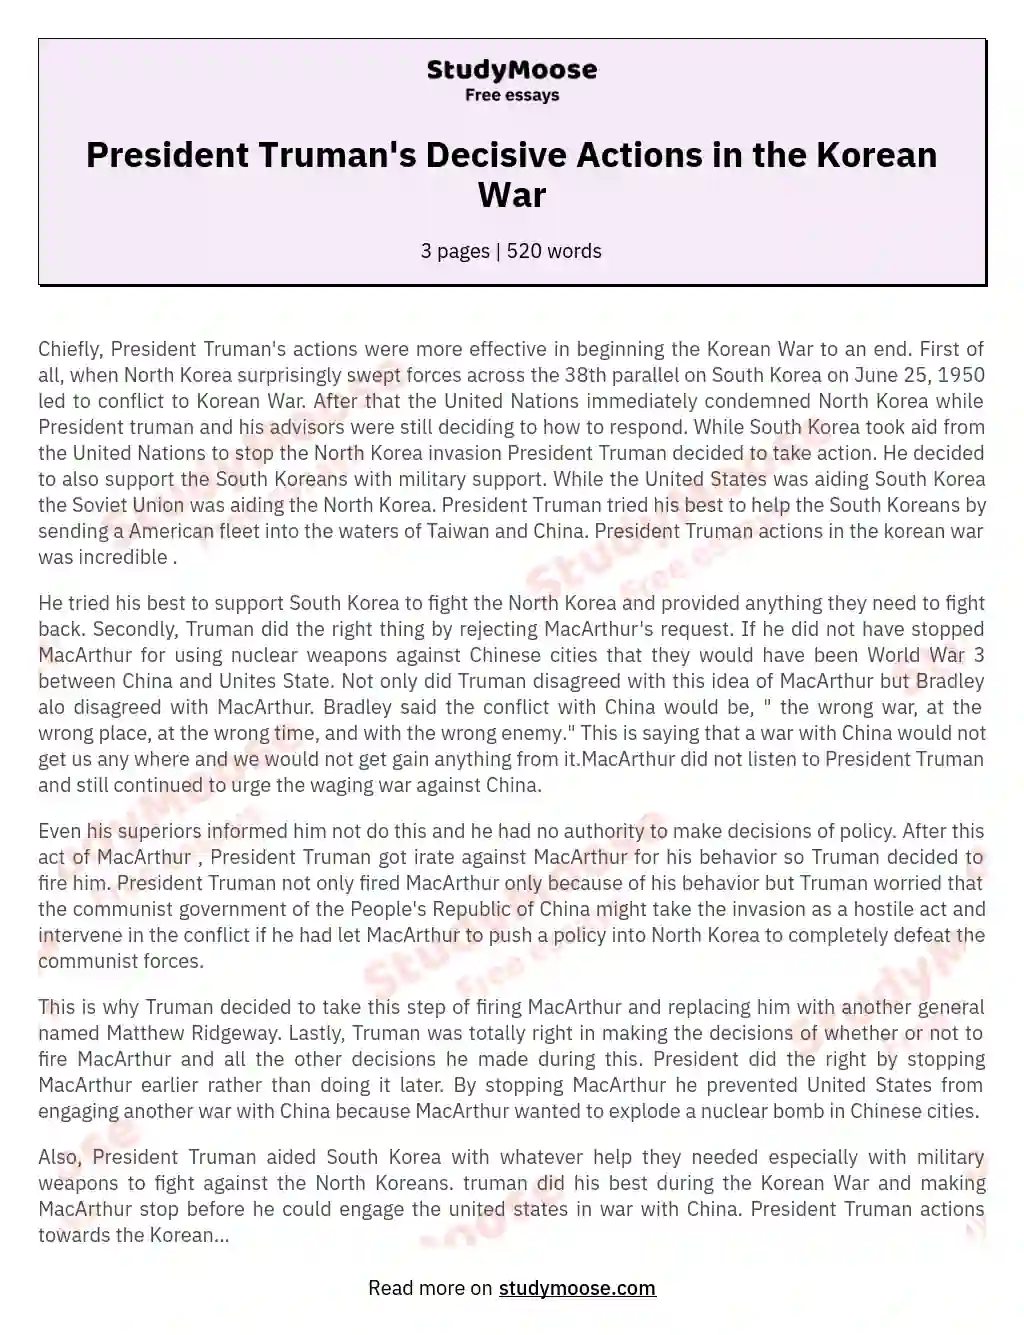 President Truman's Decisive Actions in the Korean War essay